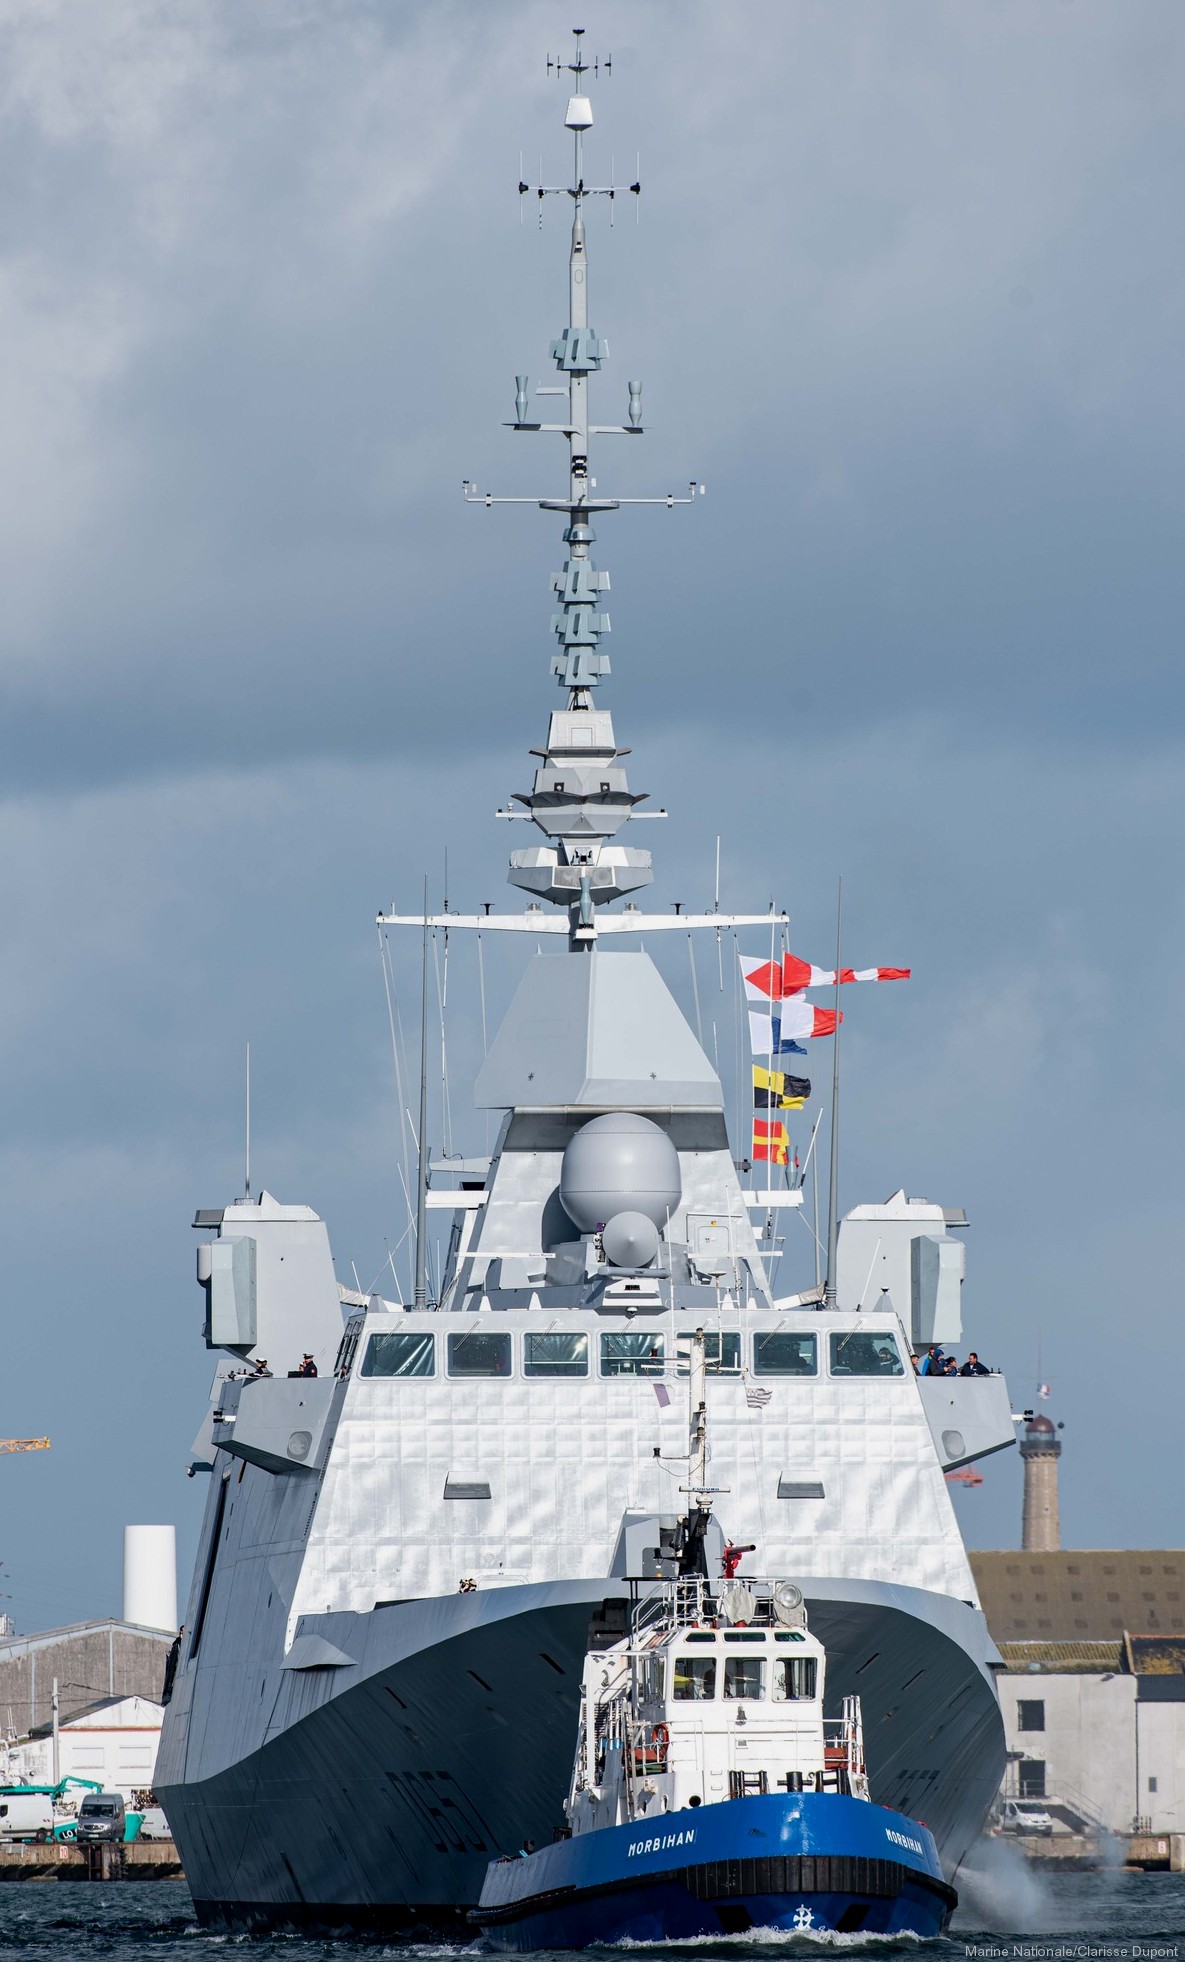 d-657 fs lorraine fremm aquitaine class frigate fregate multi purpose french navy marine nationale 11